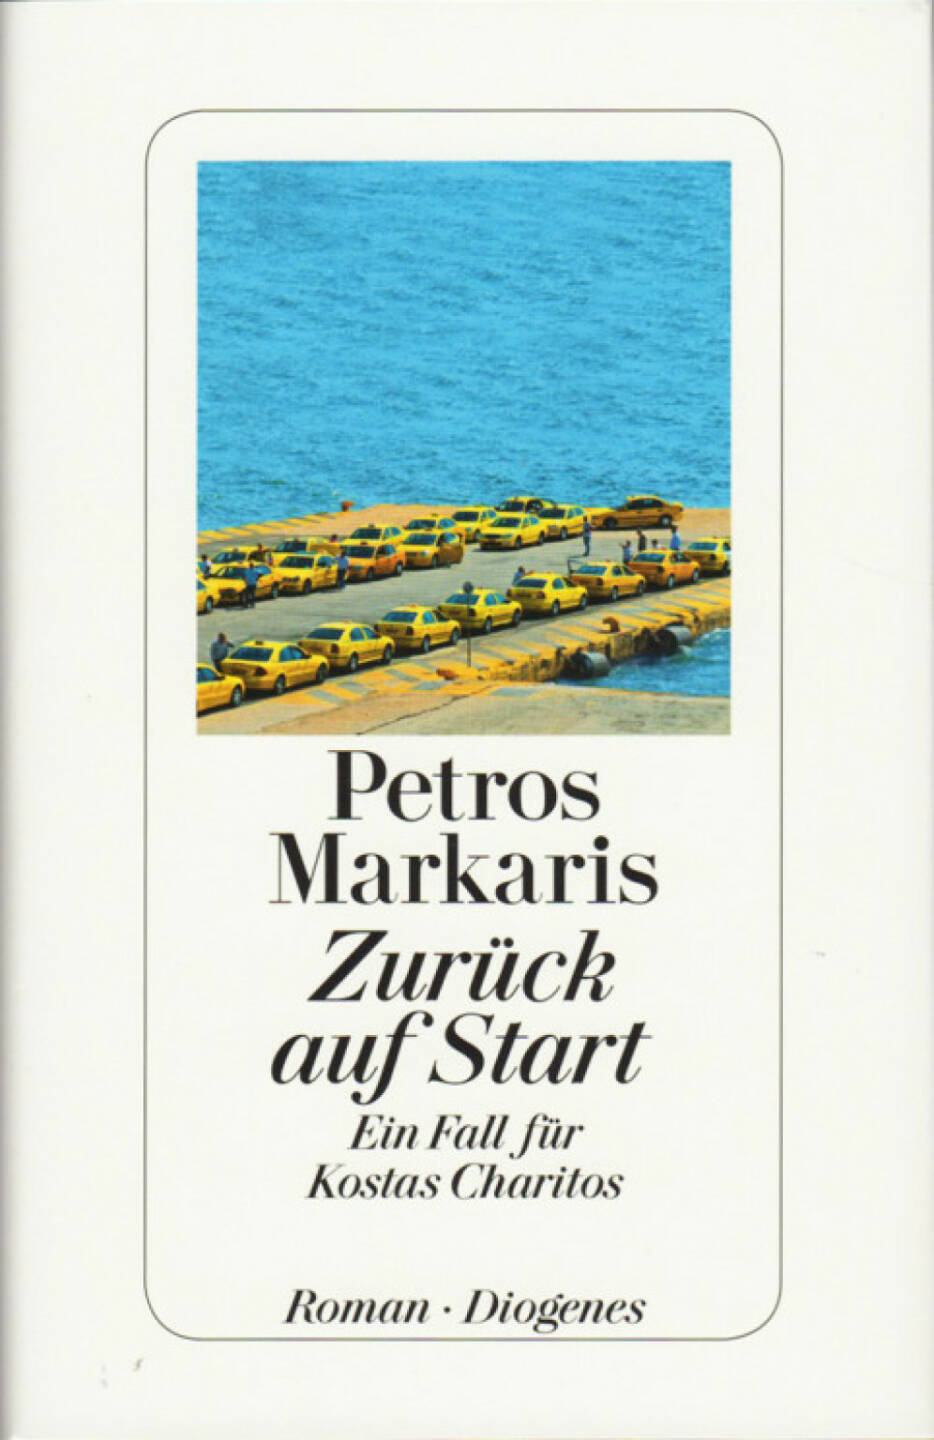 Petros Markaris - Zurück auf Start: Ein Fall für Kostas Charitos, http://boerse-social.com/financebooks/show/petros_markaris_-_zuruck_auf_start_ein_fall_fur_kostas_charitos